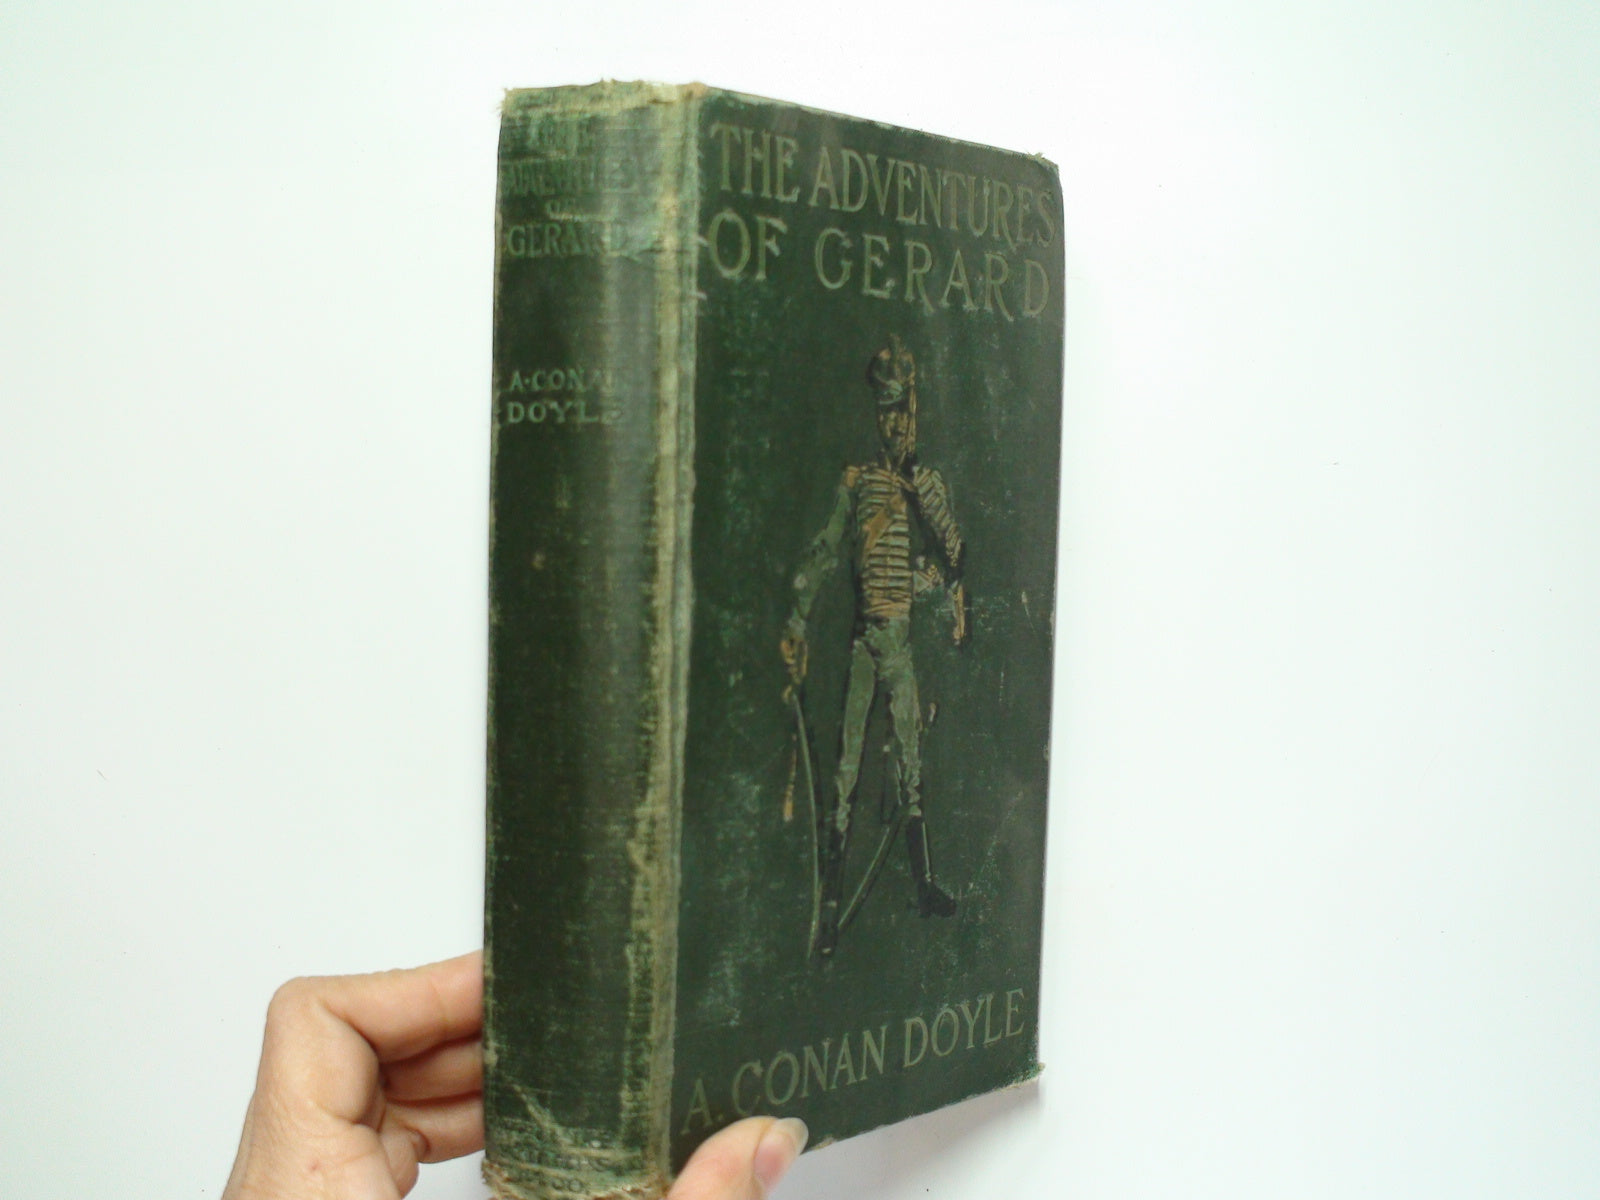 The Adventures of Gerard, Arthur Conan Doyle, 1903